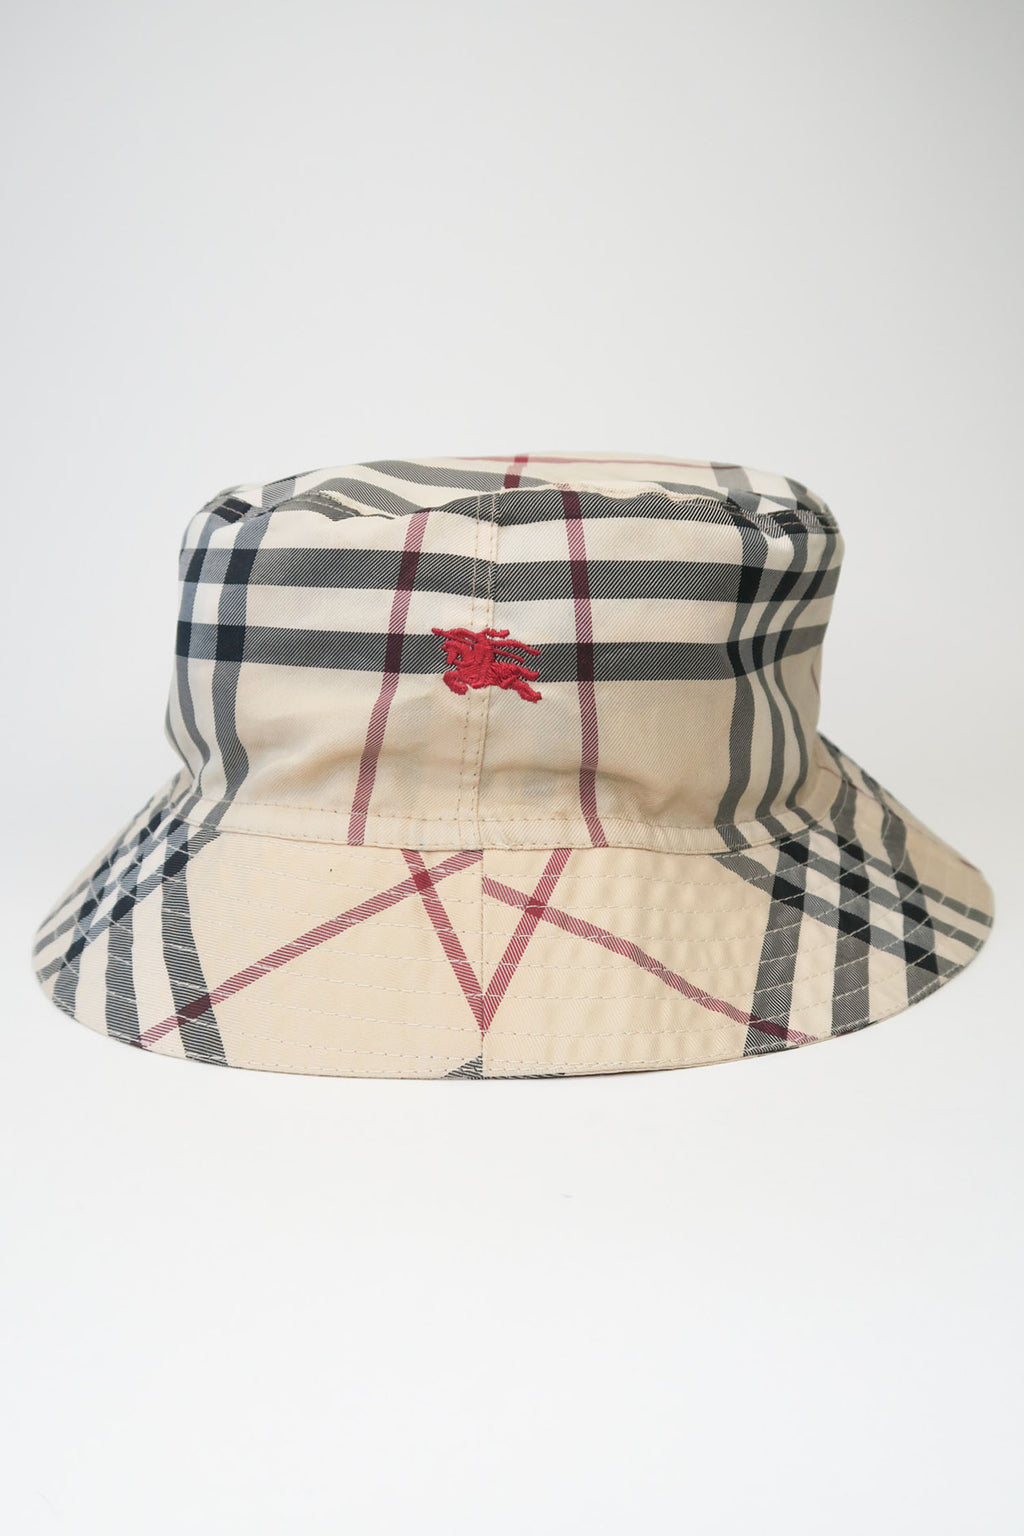 Burberry London Nova Check Pattern Bucket Hat